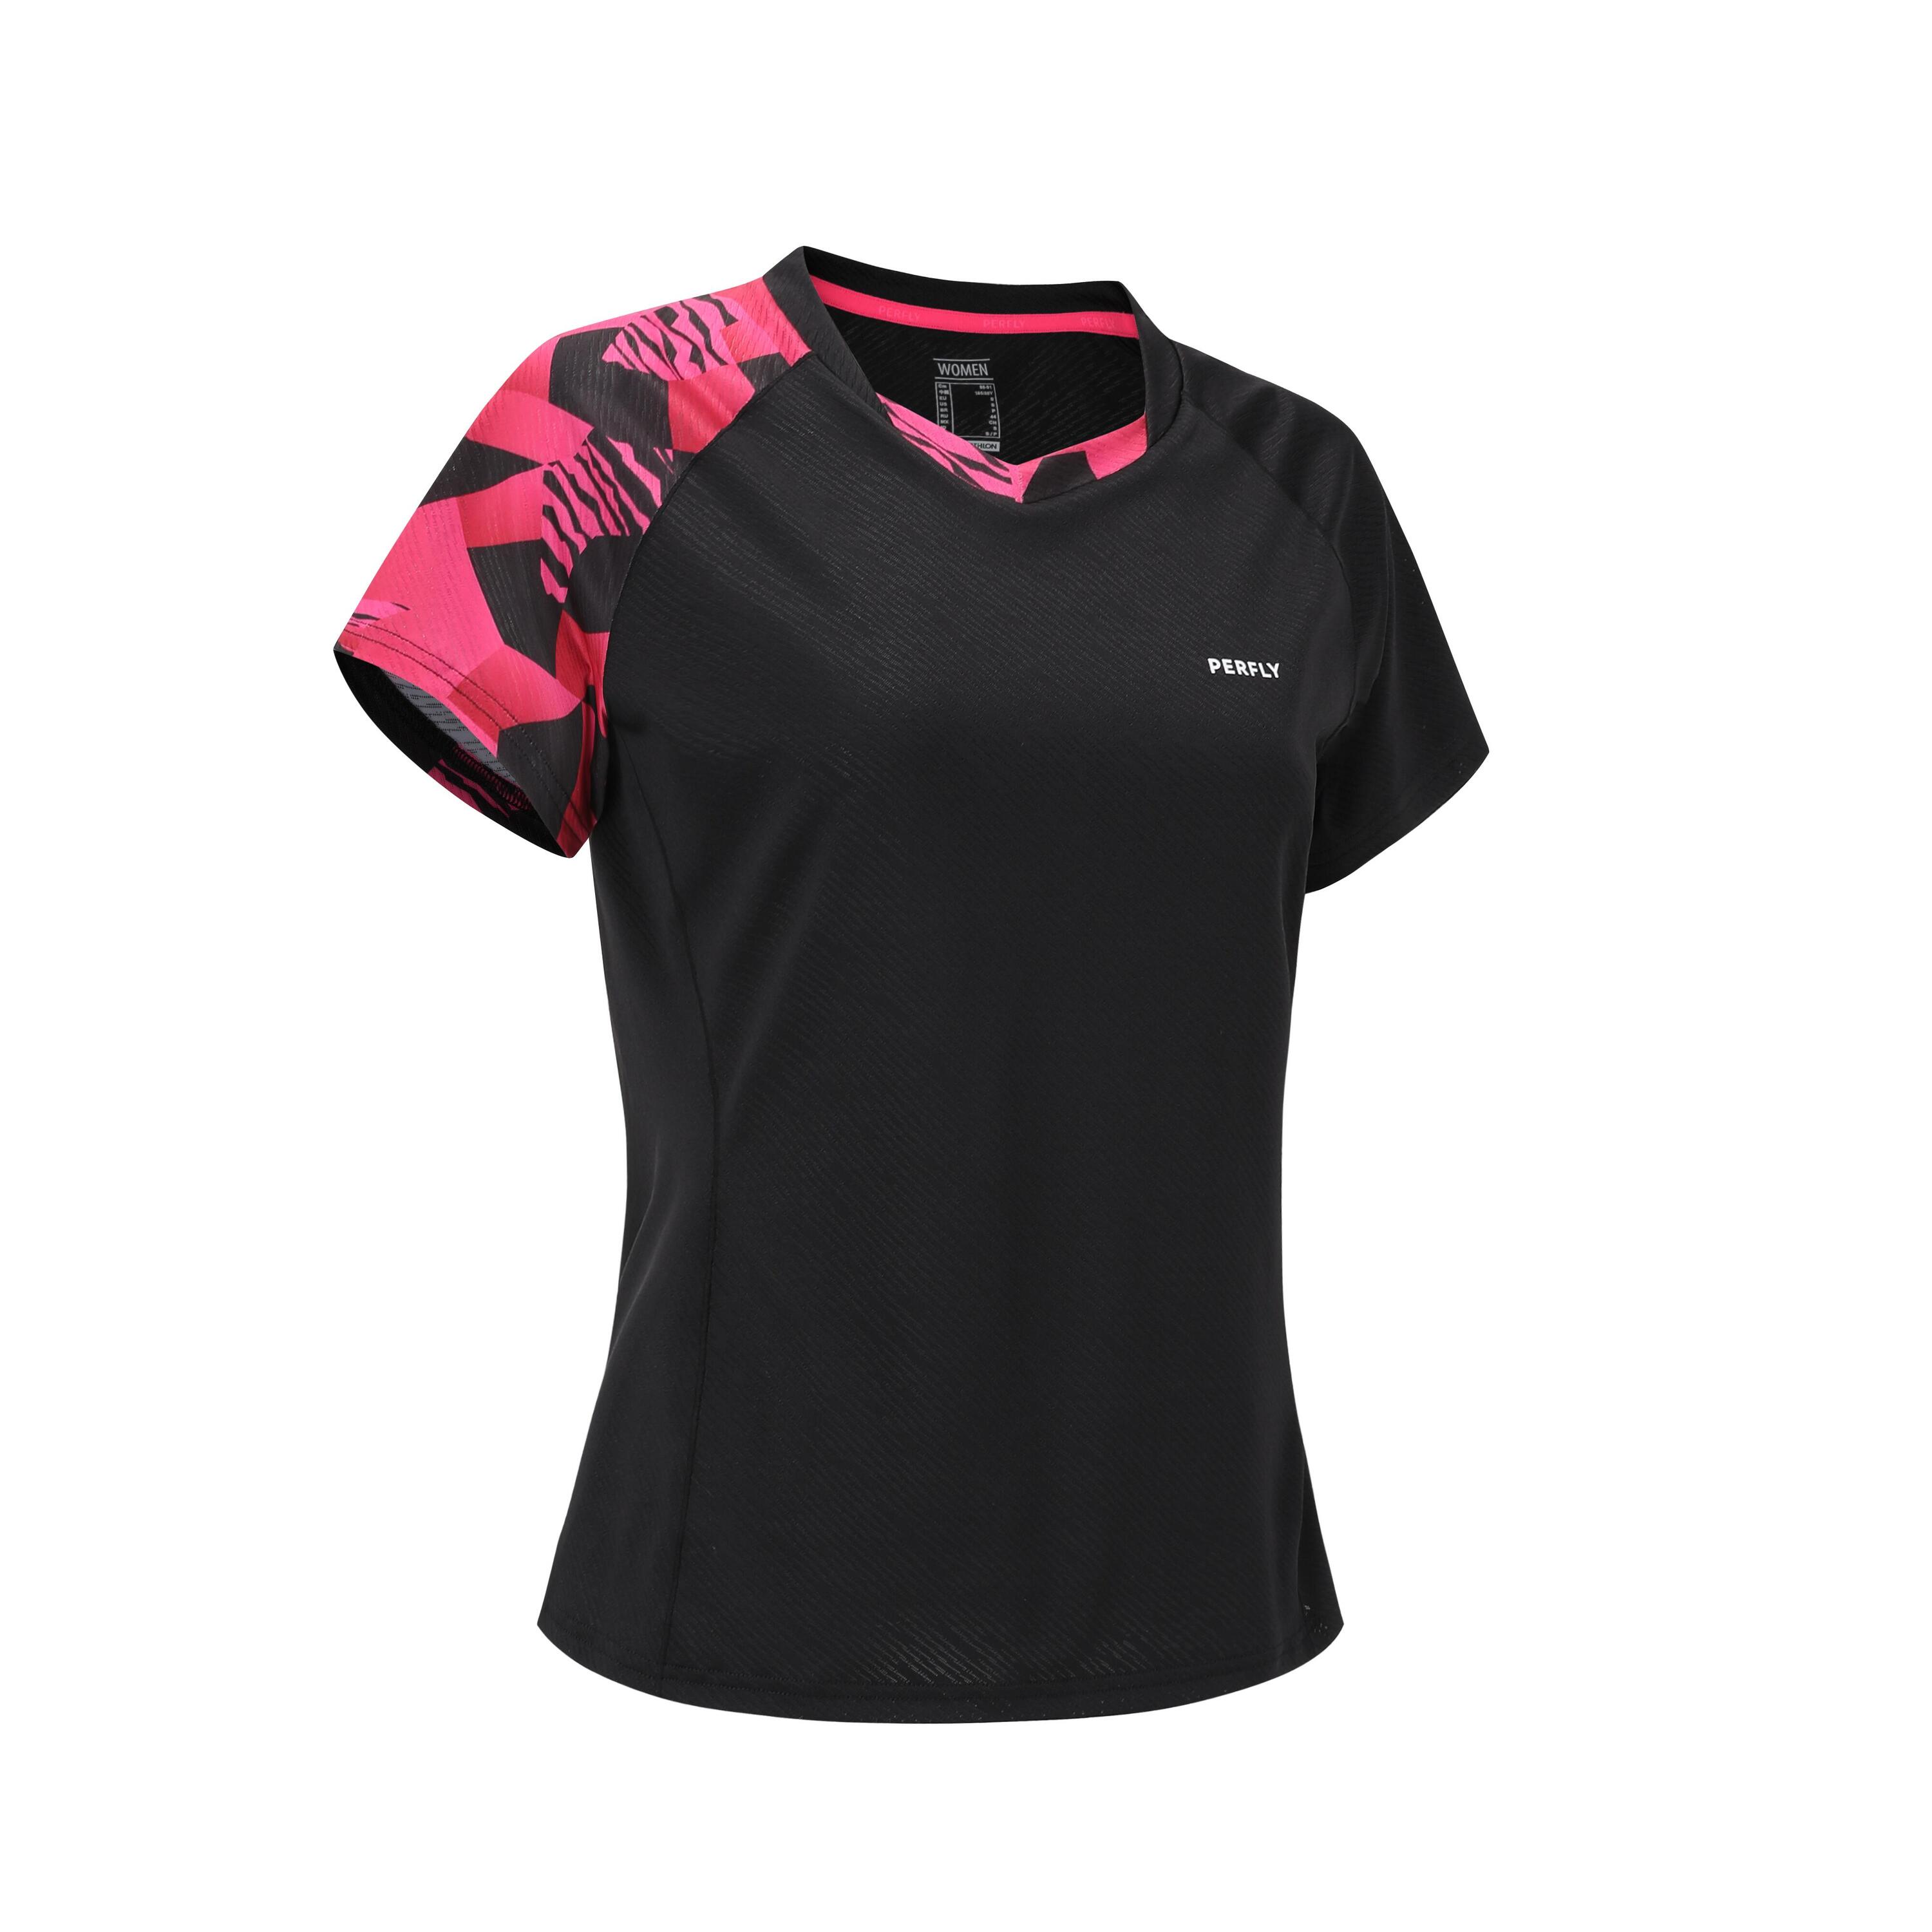 PERFLY LITE Badminton T-shirt 560 Women Black Fluo